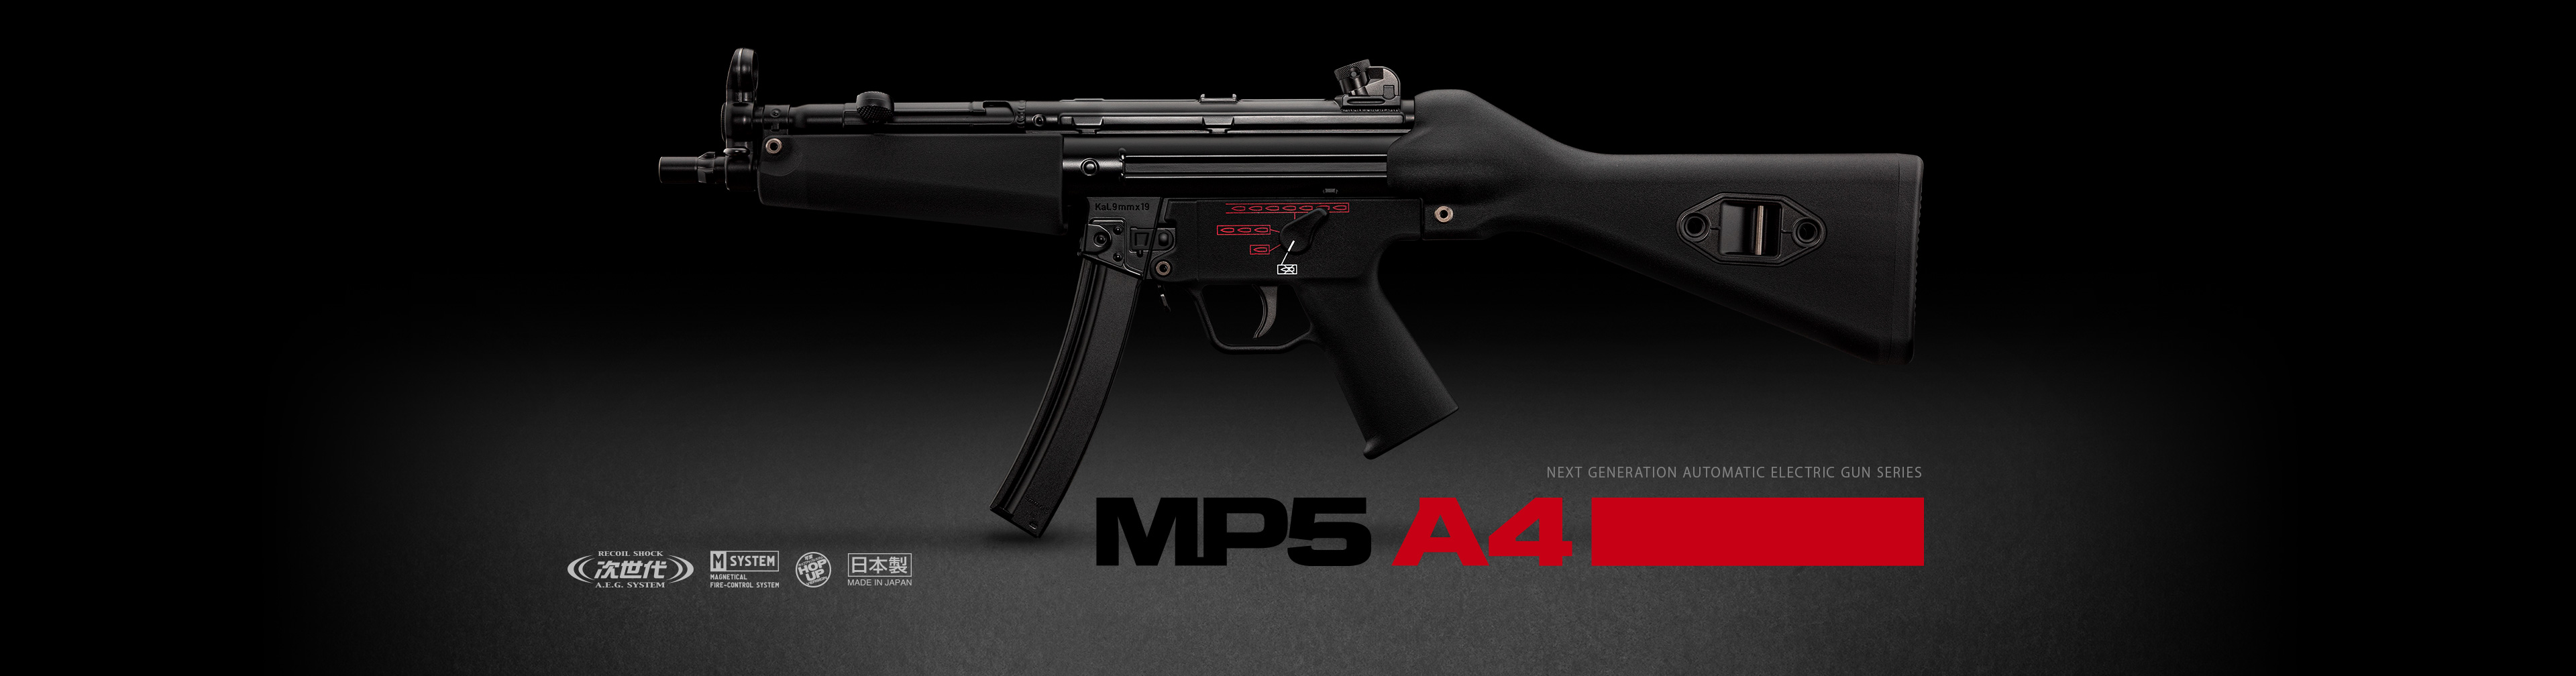 MP5 A4 - 次世代電動ガン | 東京マルイ エアソフトガン情報サイト